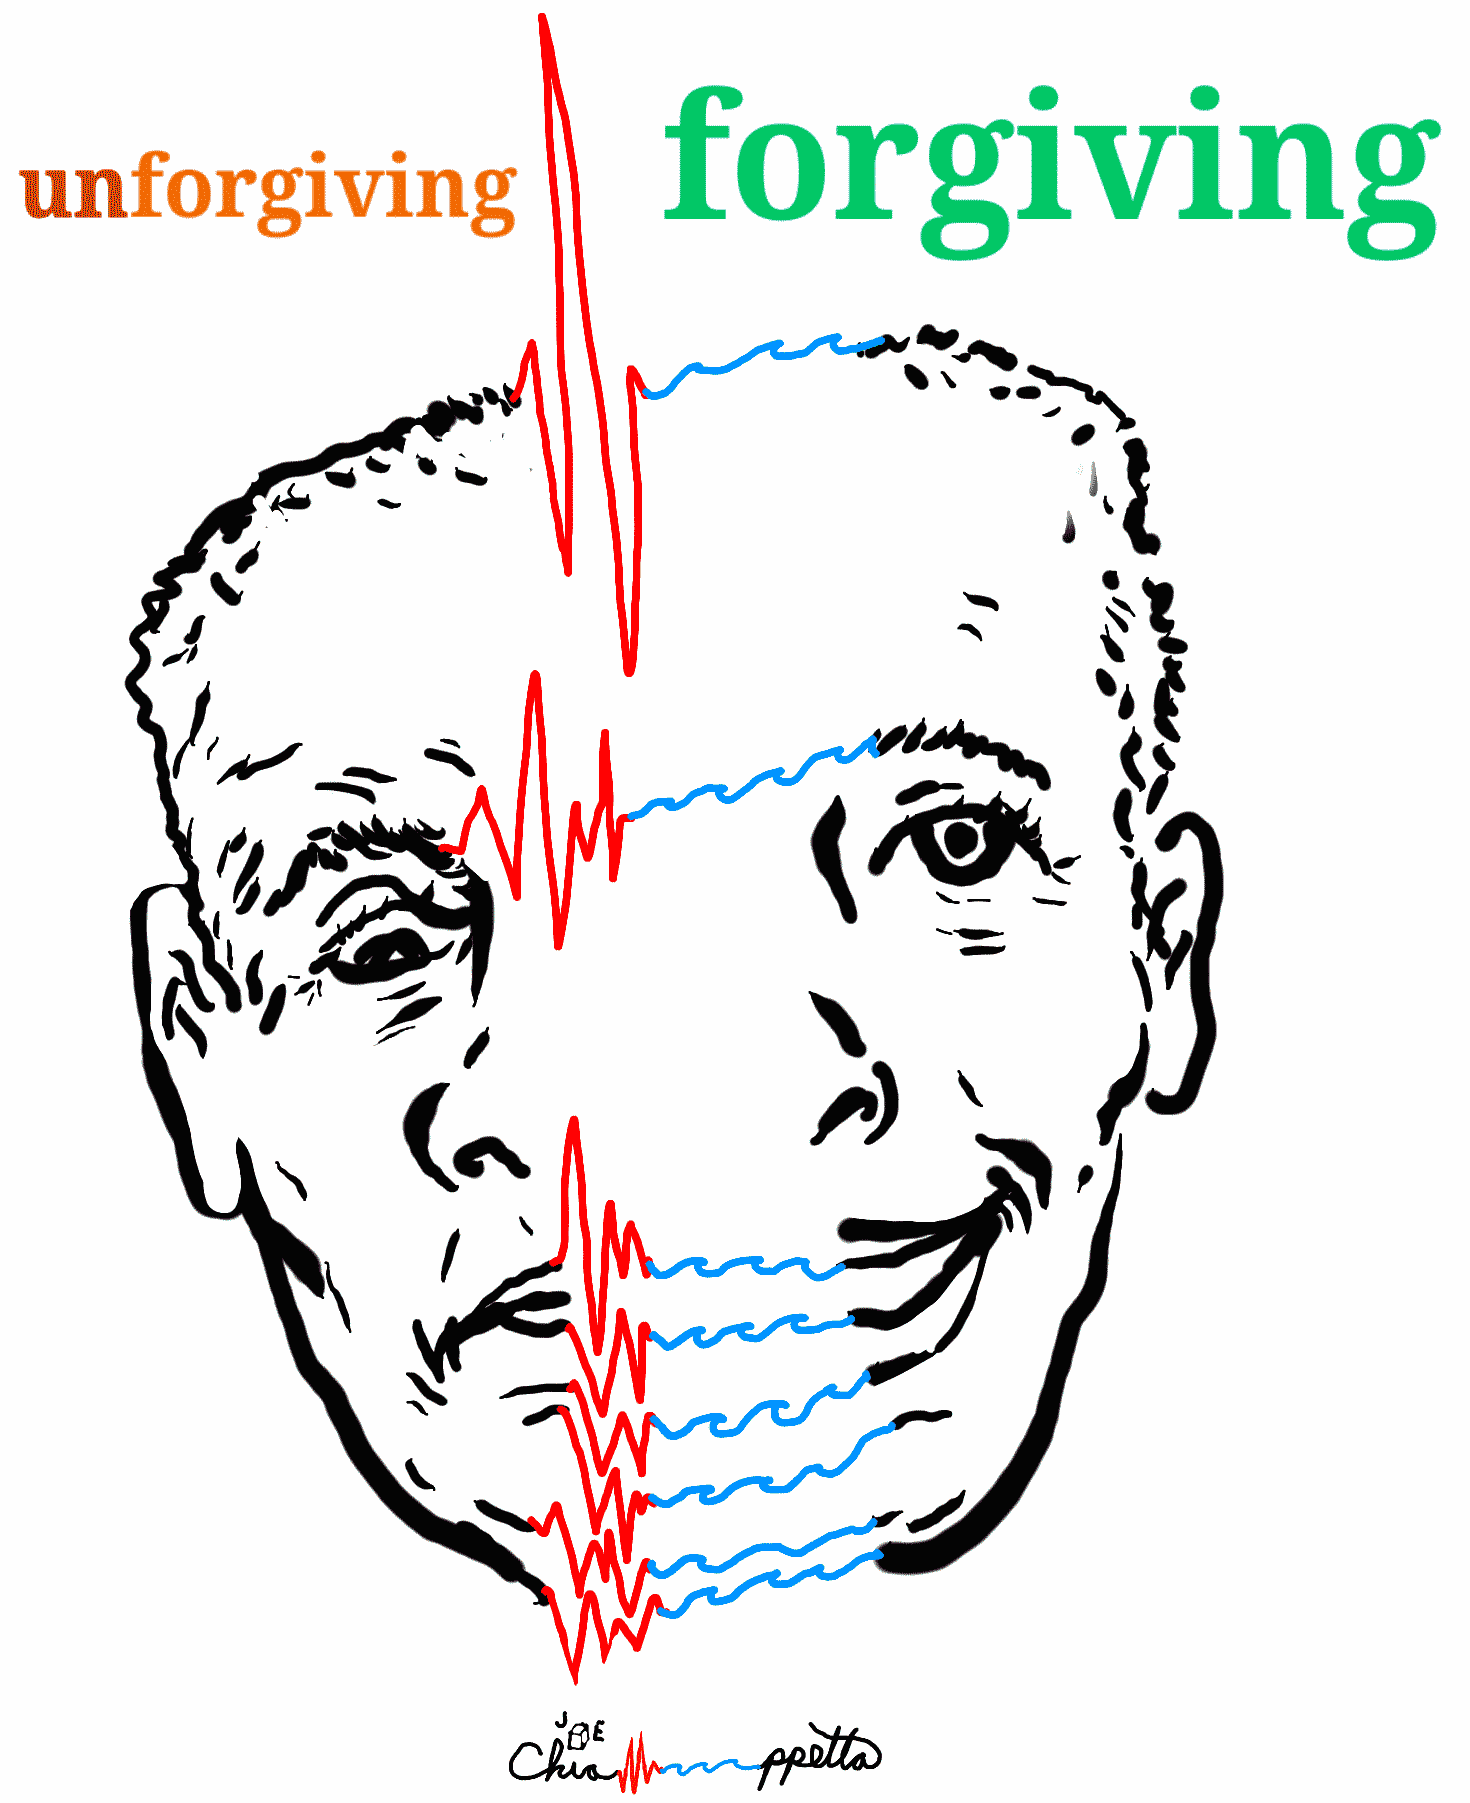 Forgiving is rare digital art by Joe Chiappetta